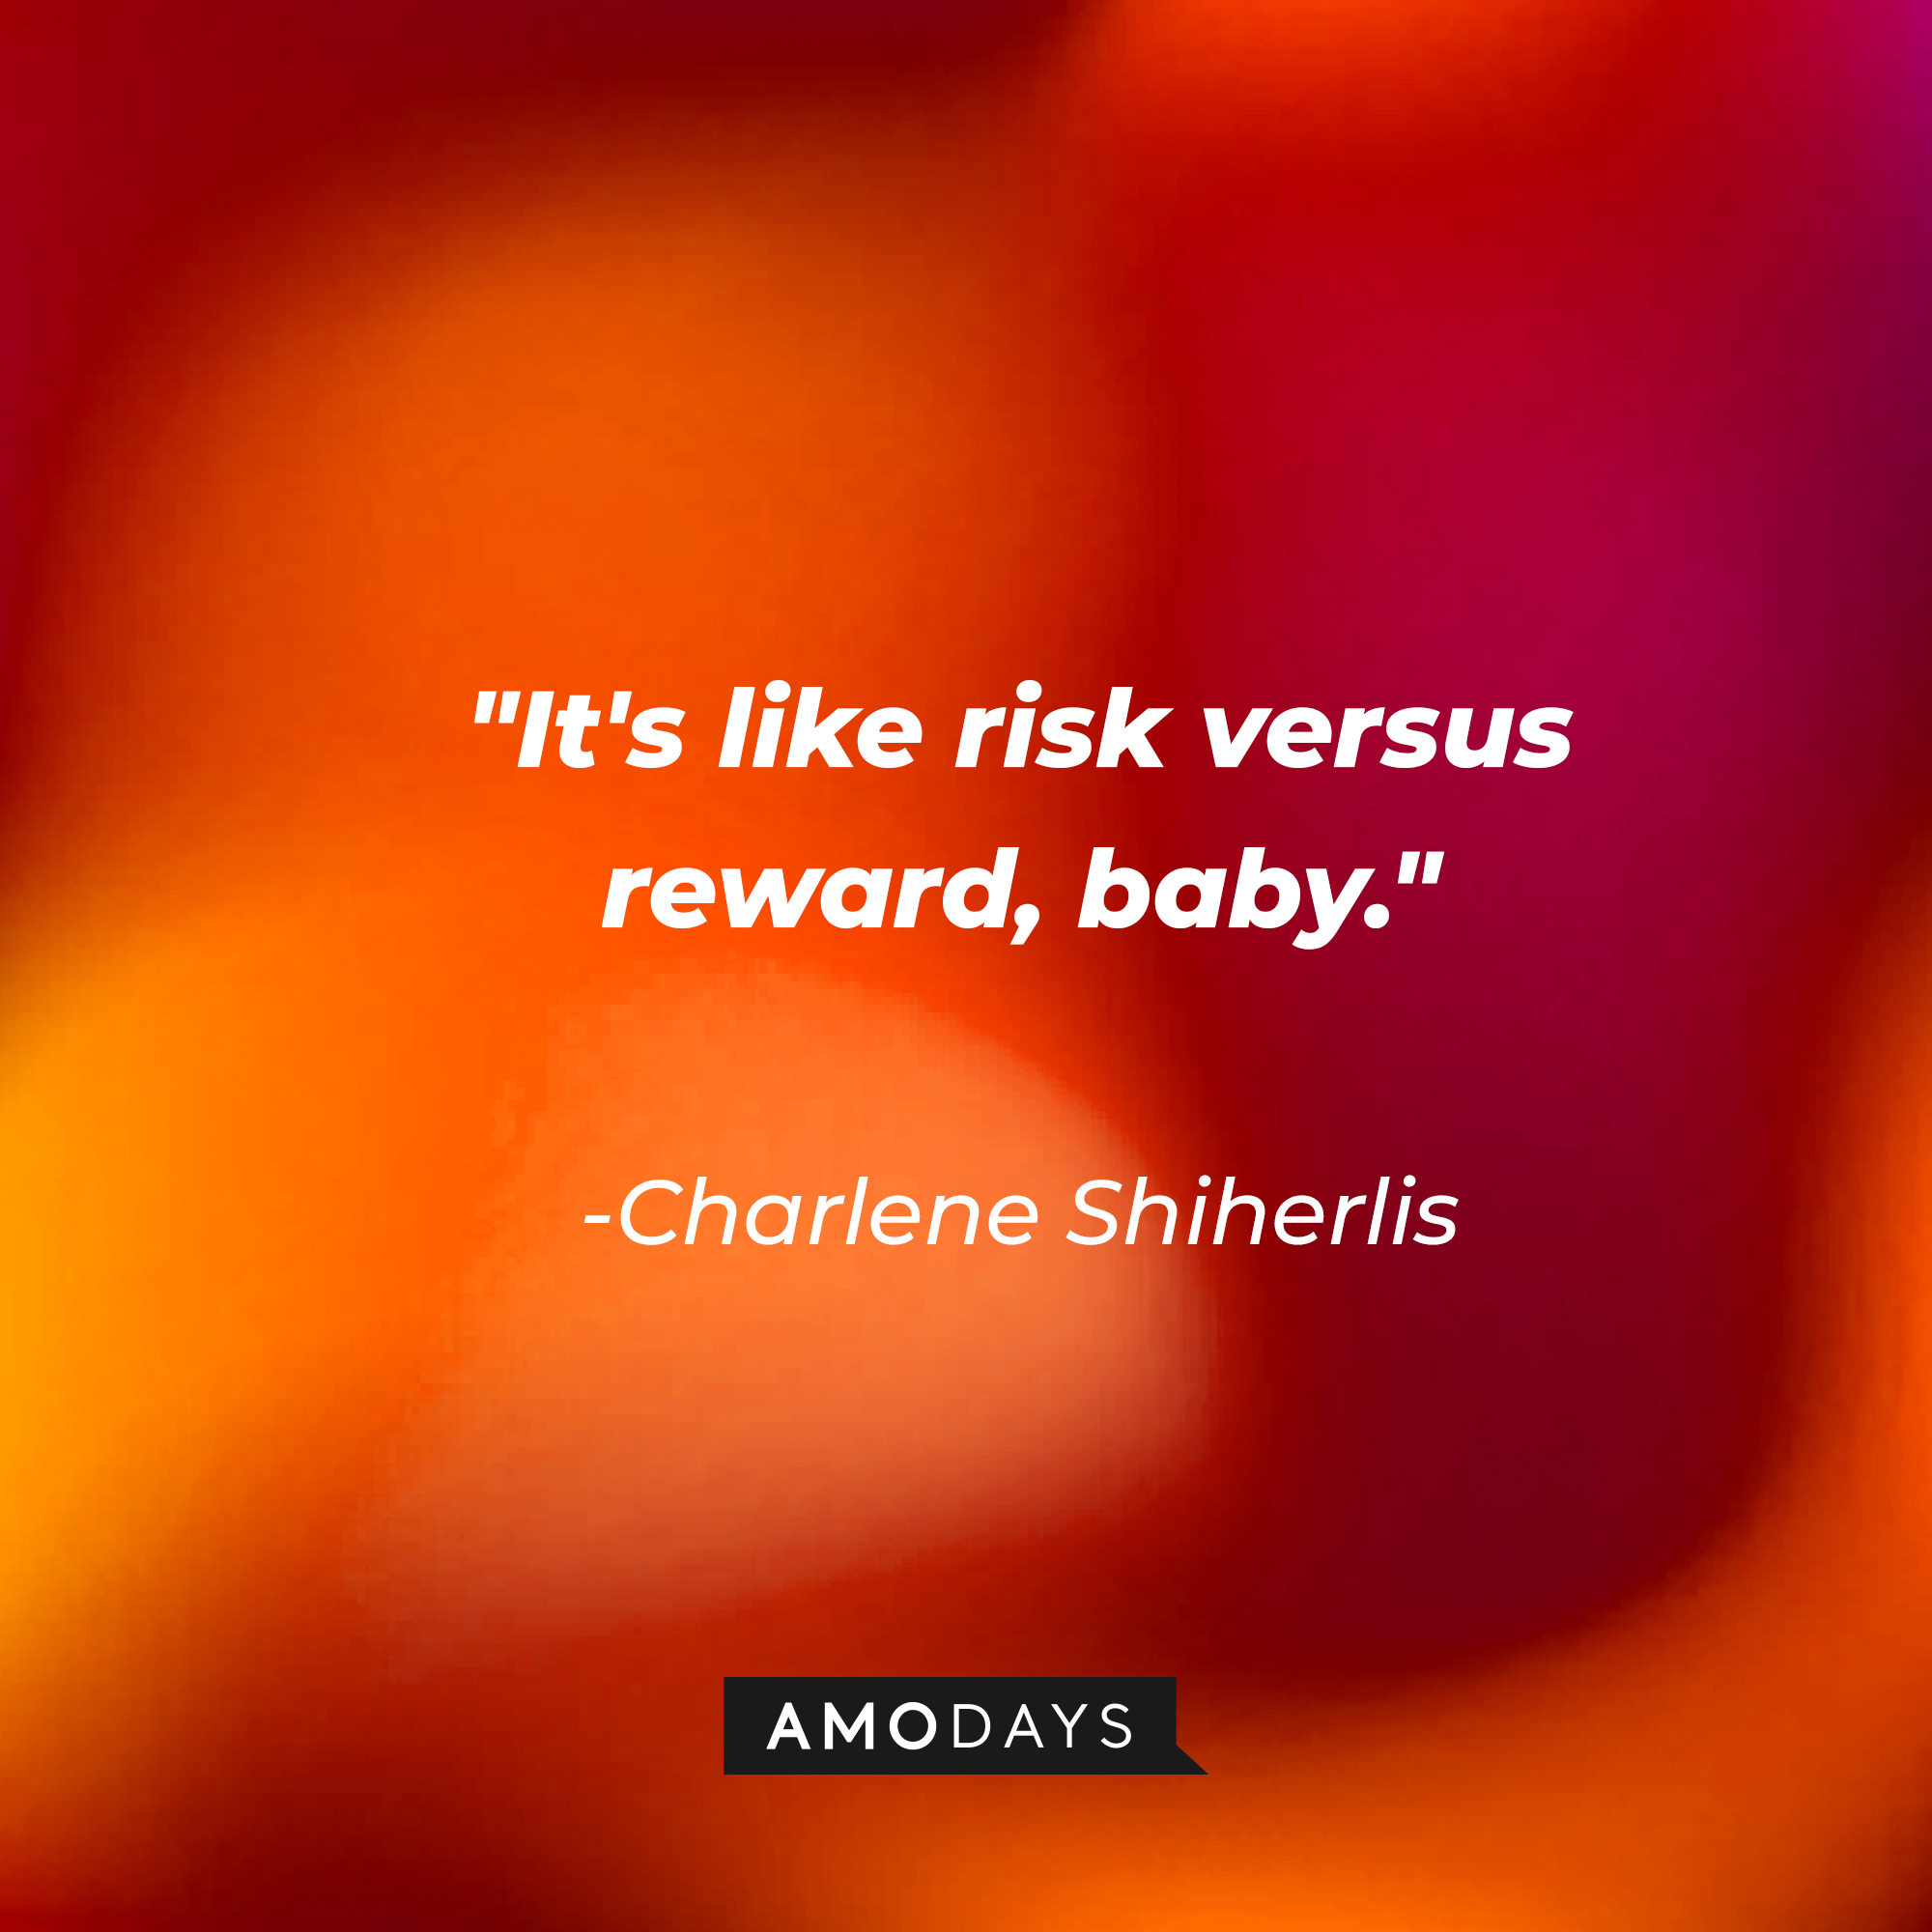 Charlene Shiherlis' quote: "It's like risk versus reward, baby." | Source: AmoDays